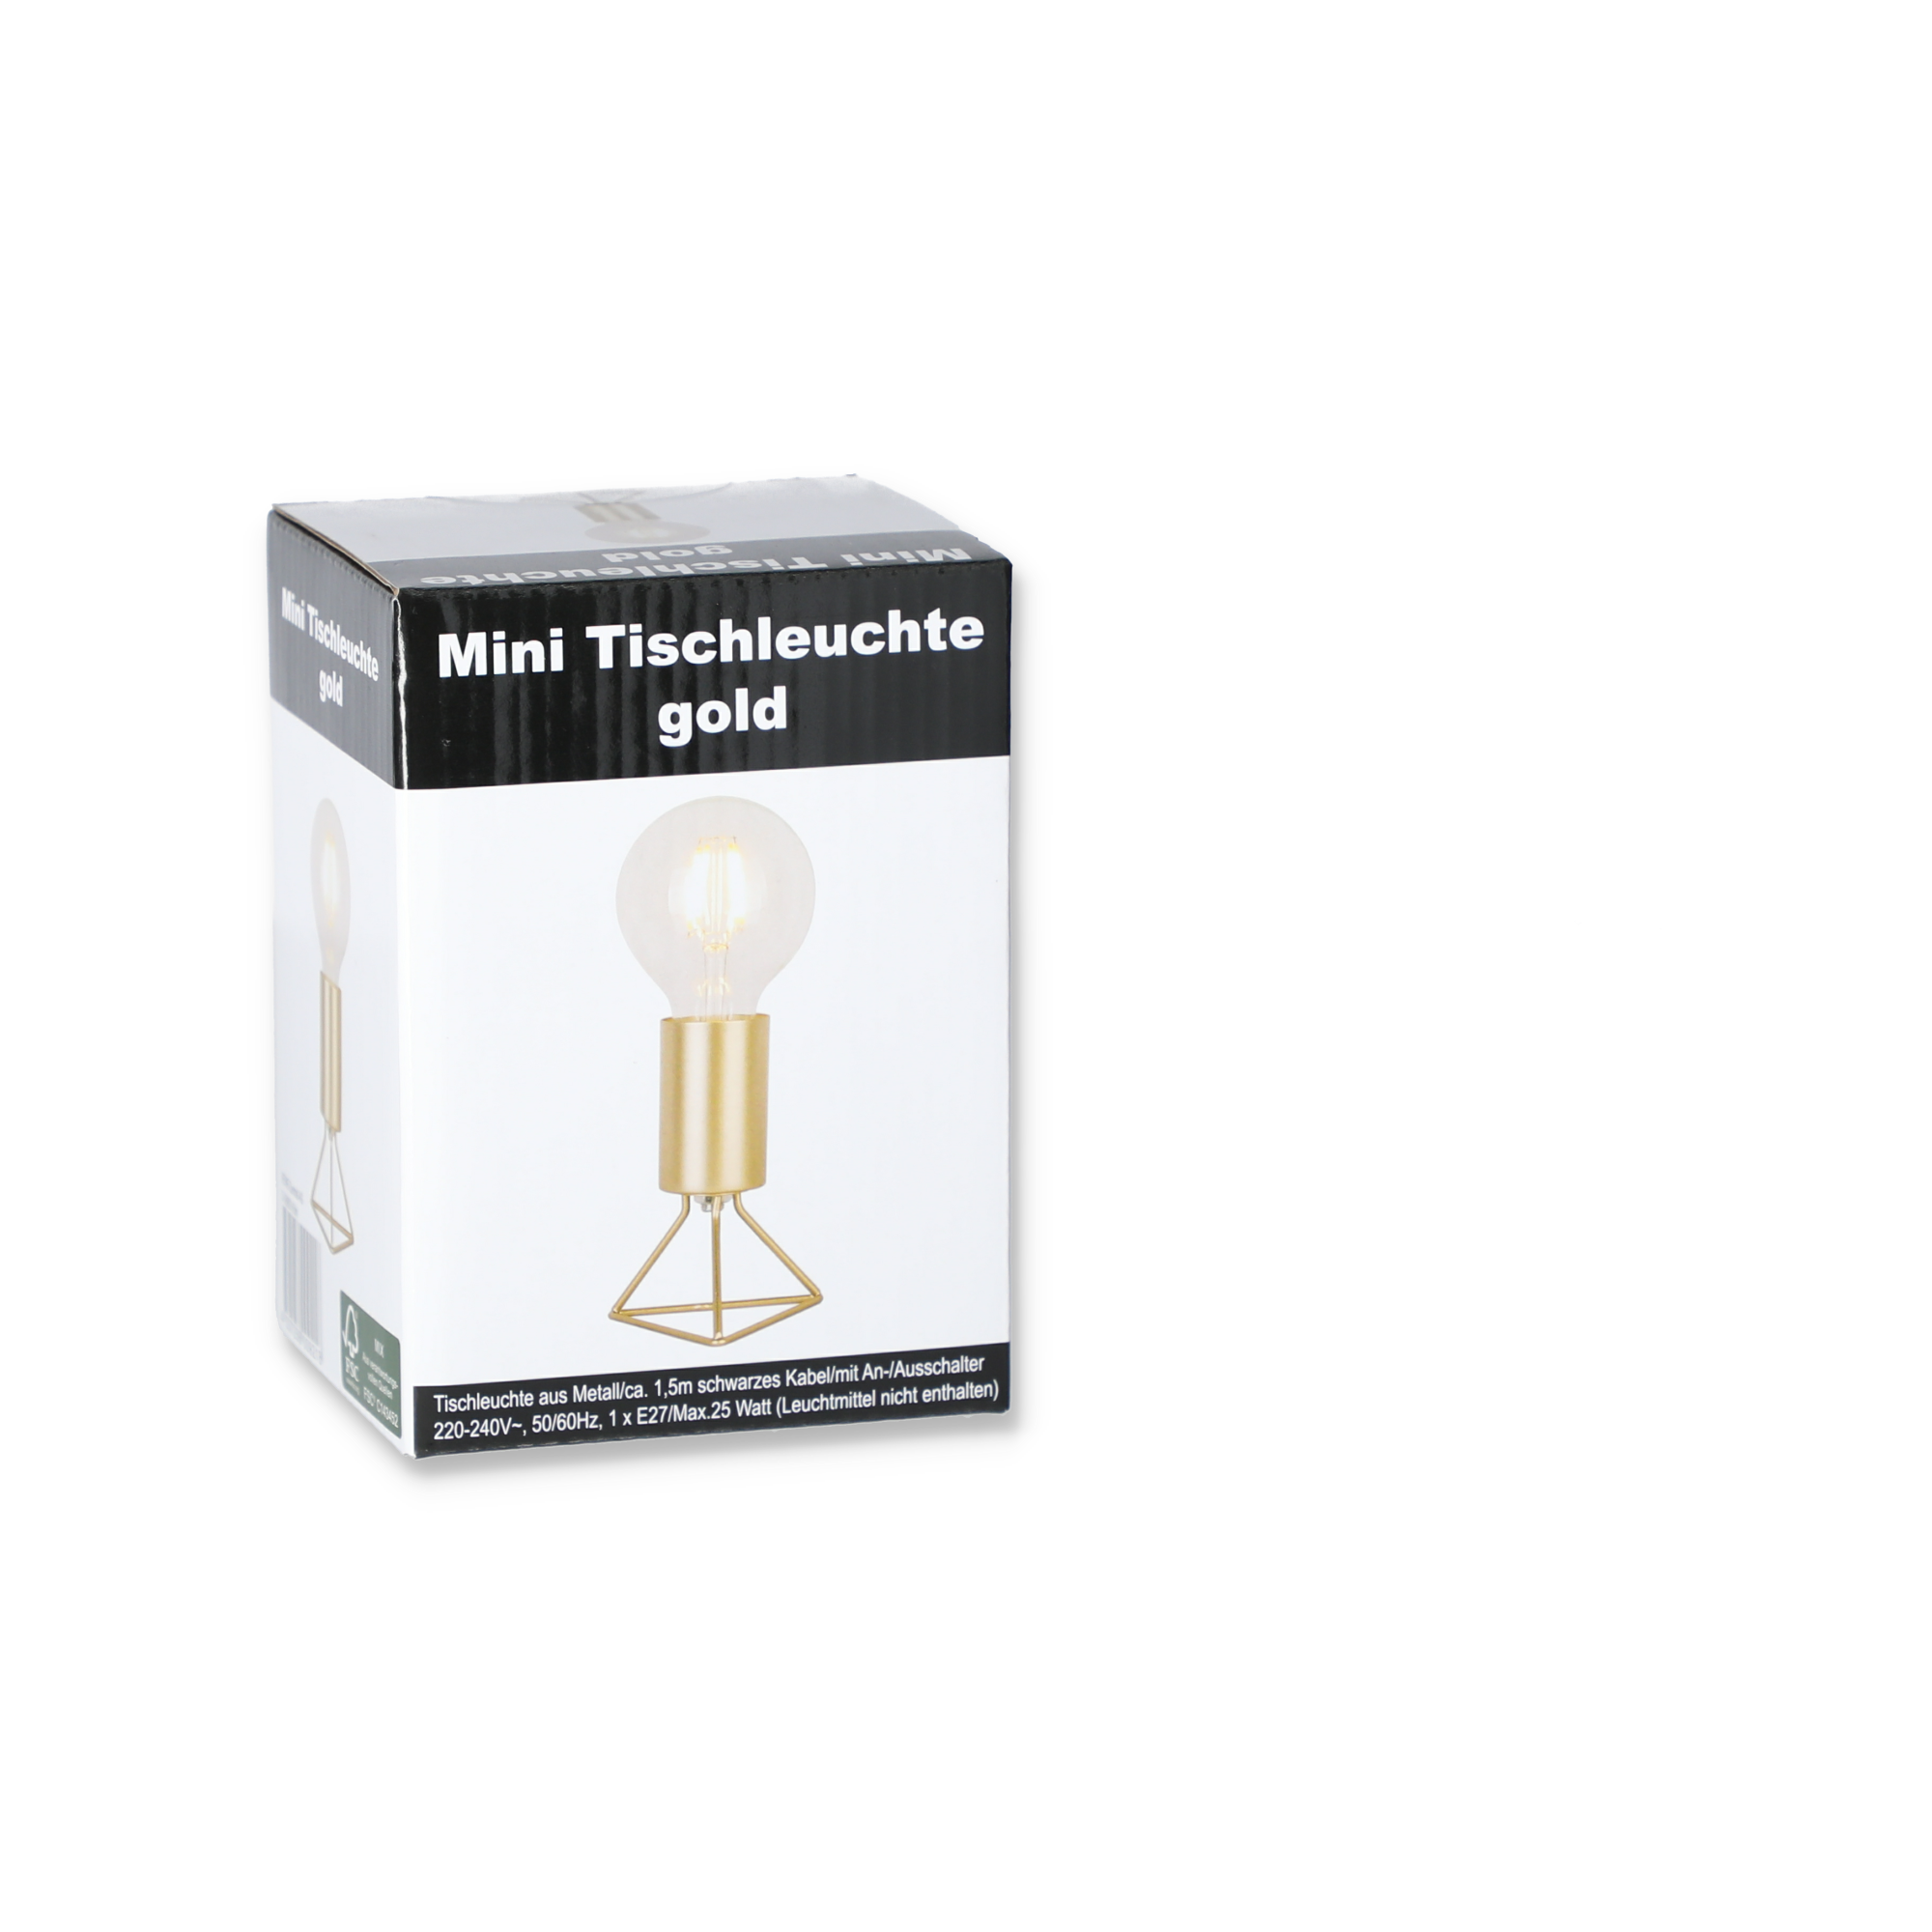 Tischleuchte 'Mini' gold 8,8 x 12,5 cm + product picture